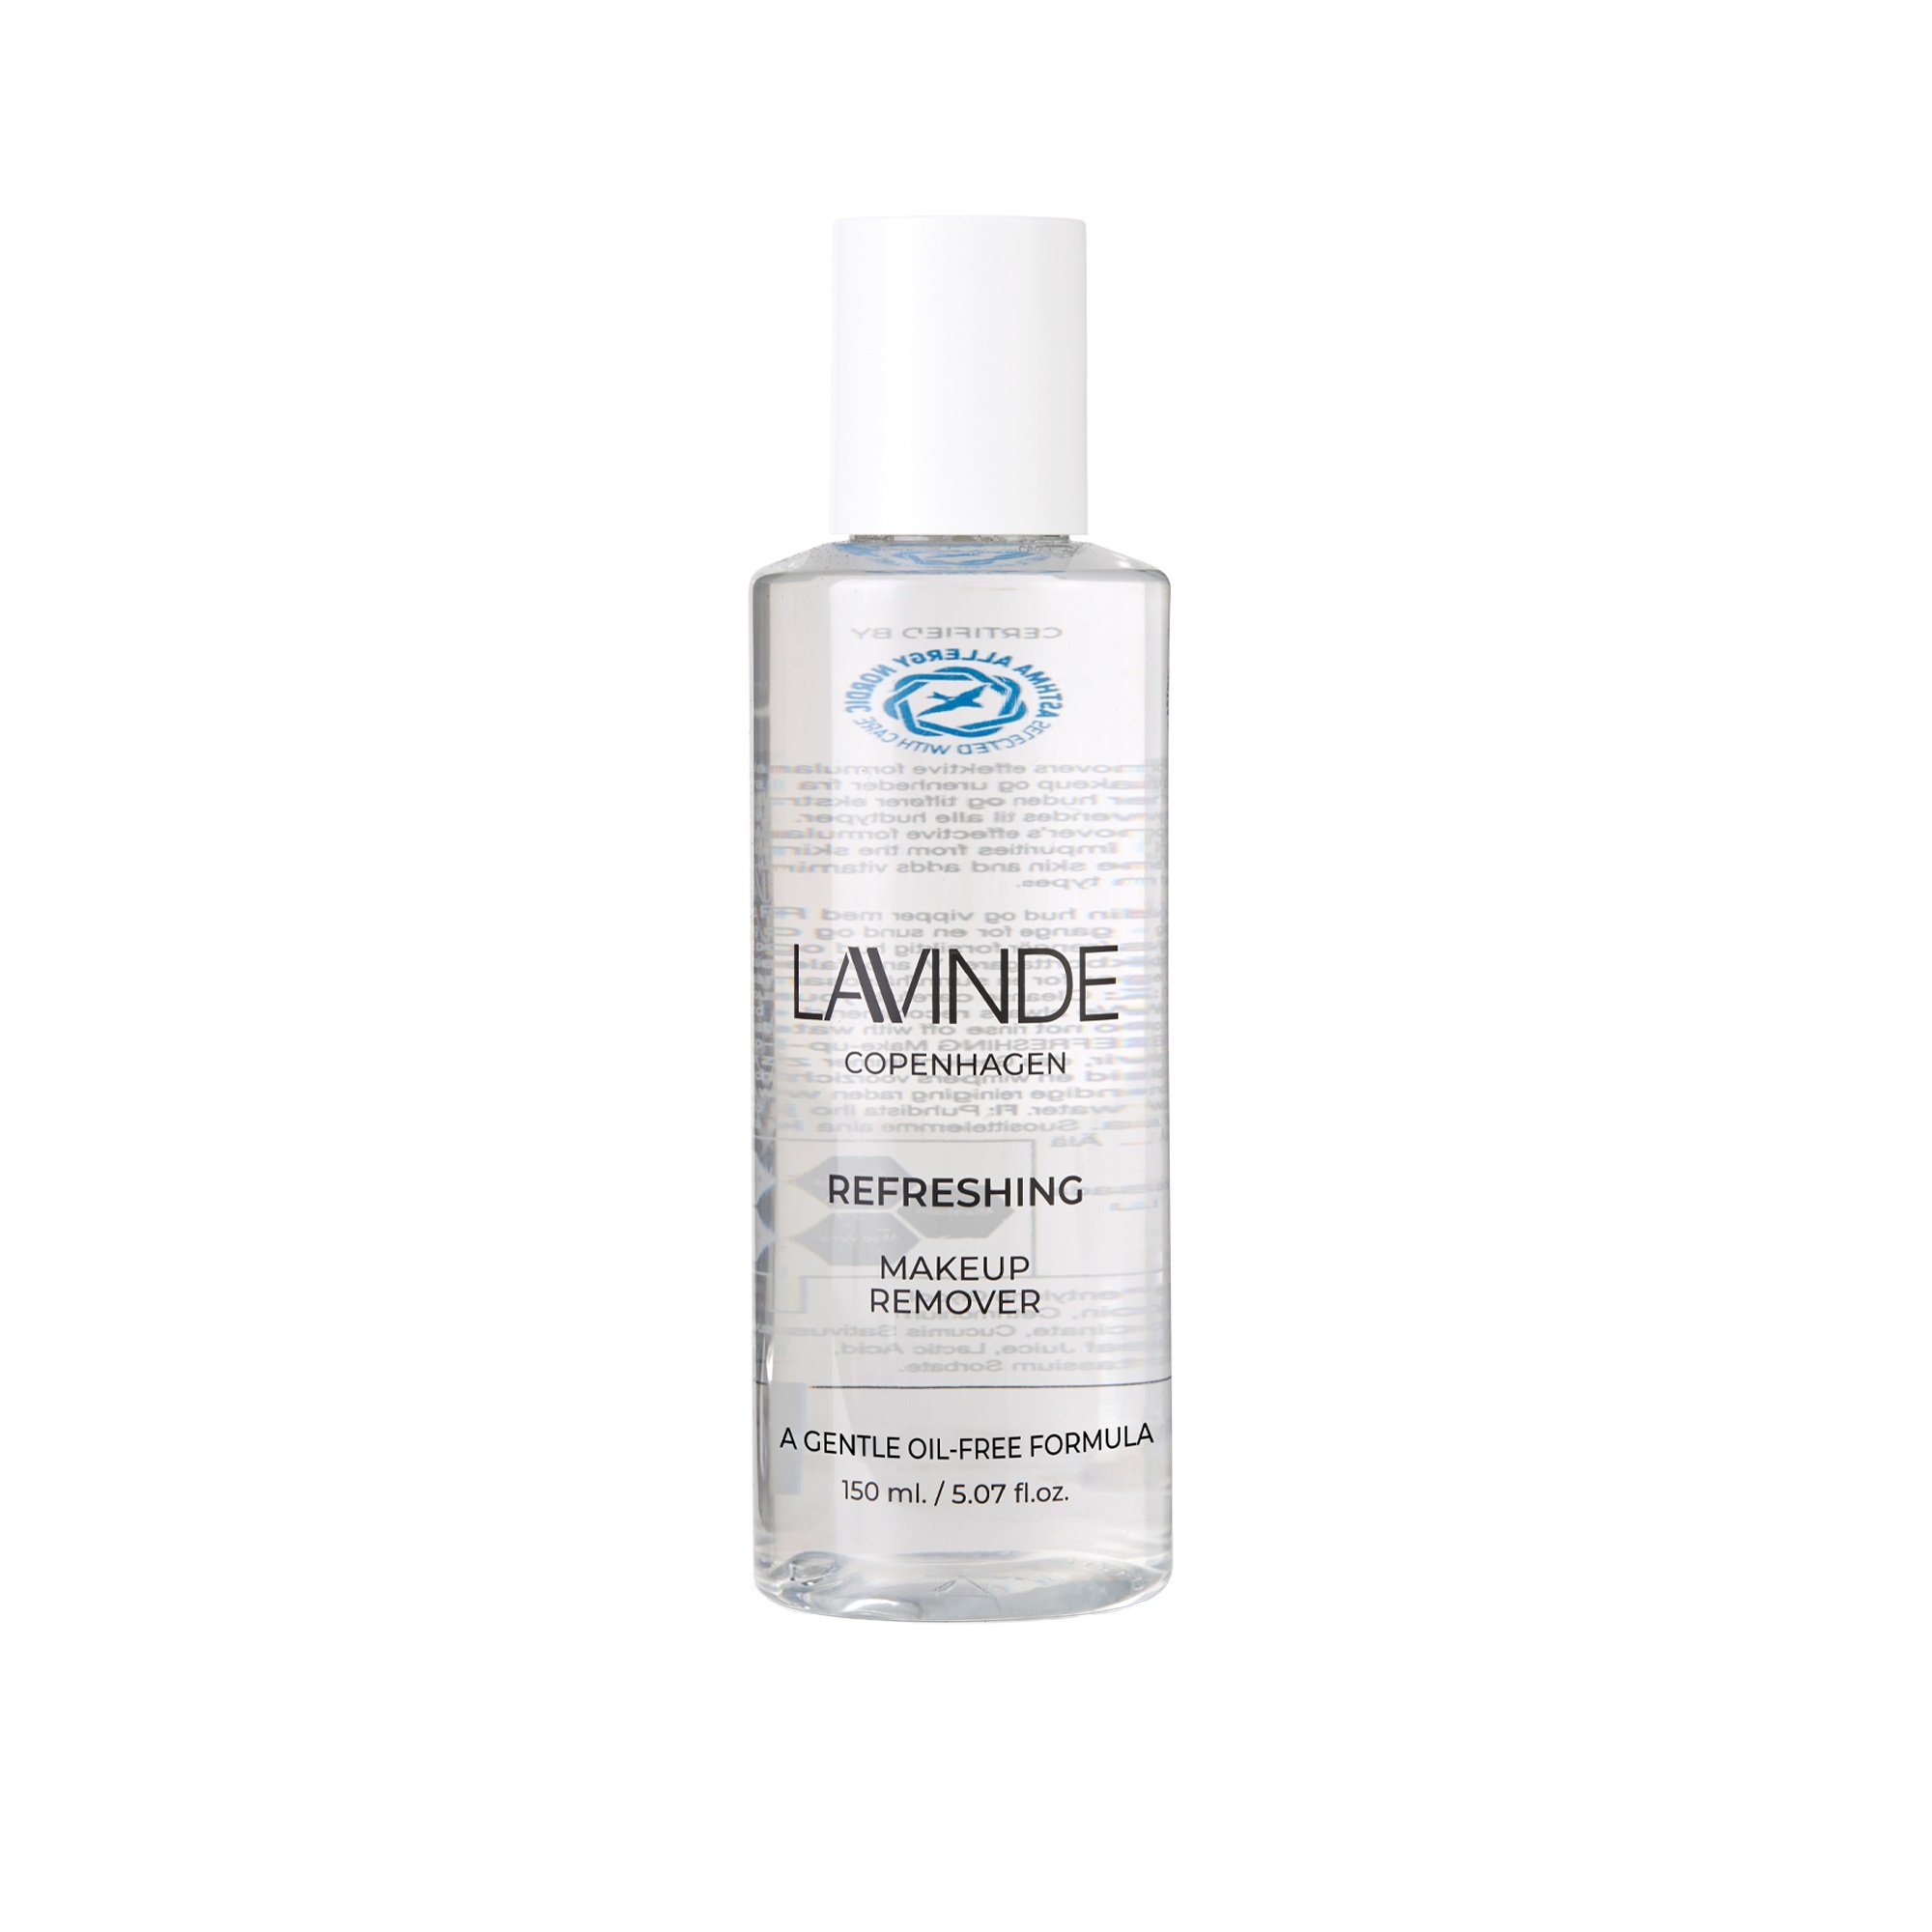 Lavinde Copenhagen - Refreshing Makeup Remover 150 ml